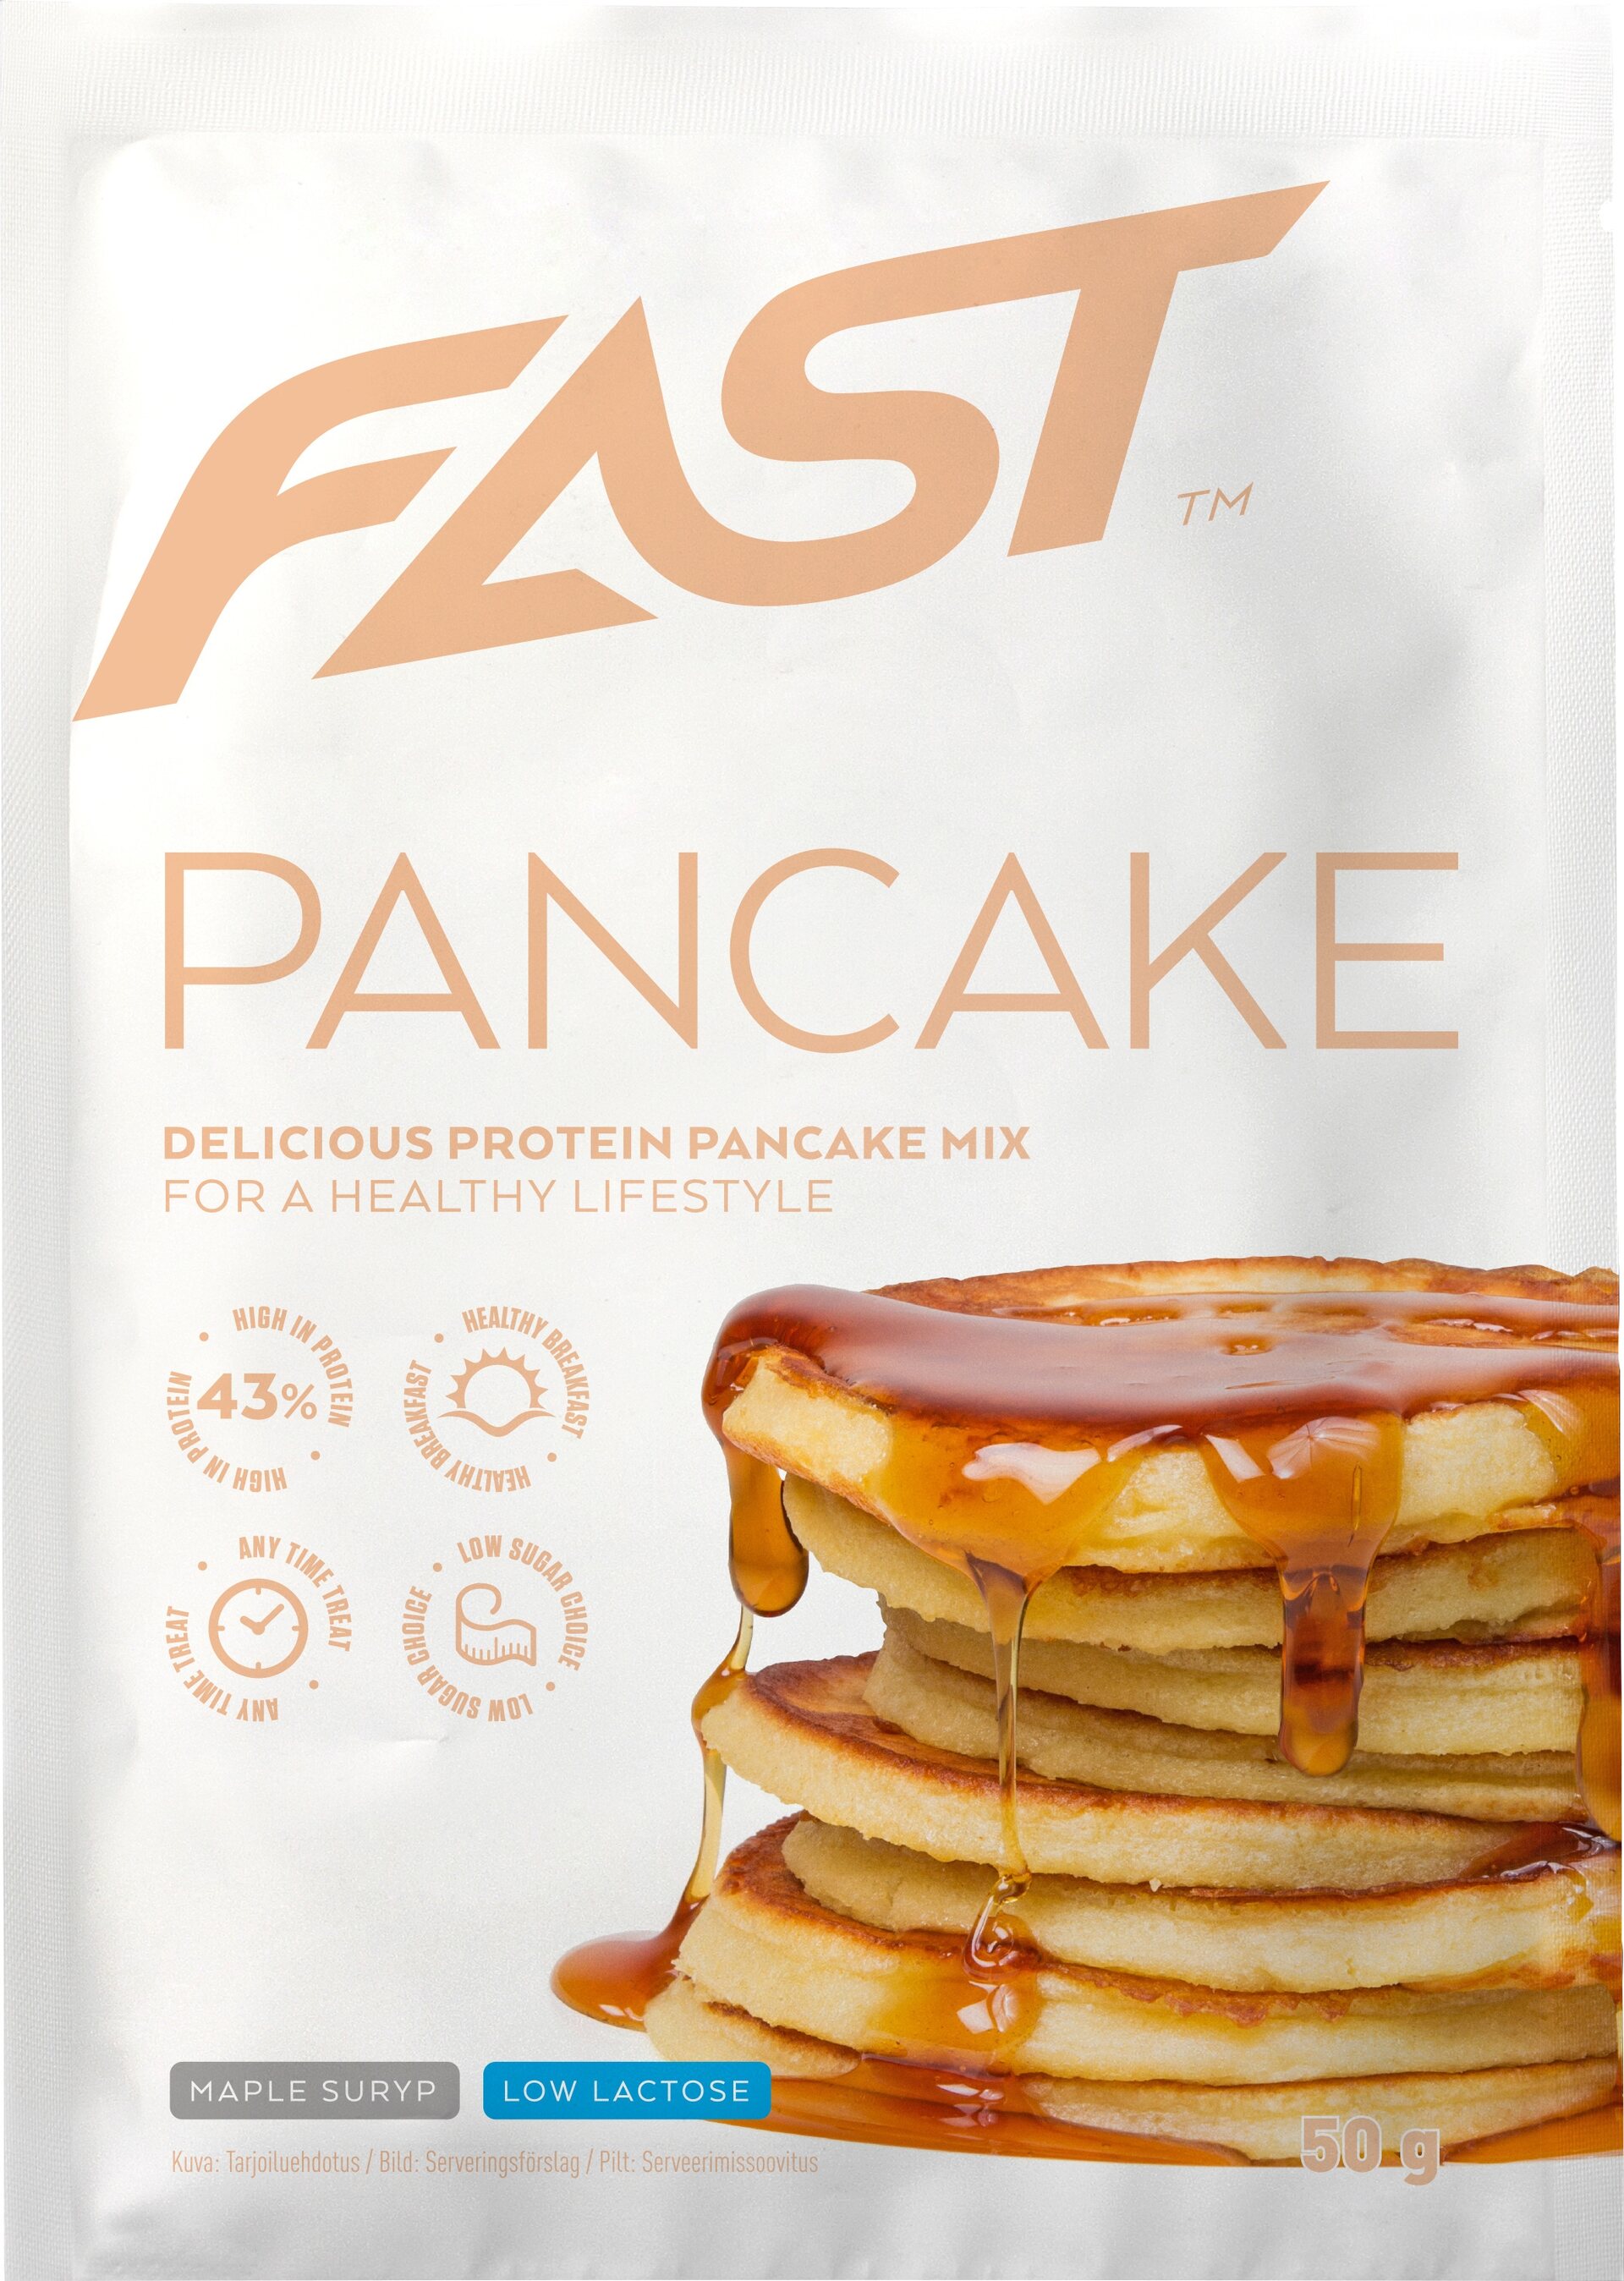 Resonate hugge Revisor FAST Protein Pancake Mix 600g | Proteins | Metsästyskeskus English